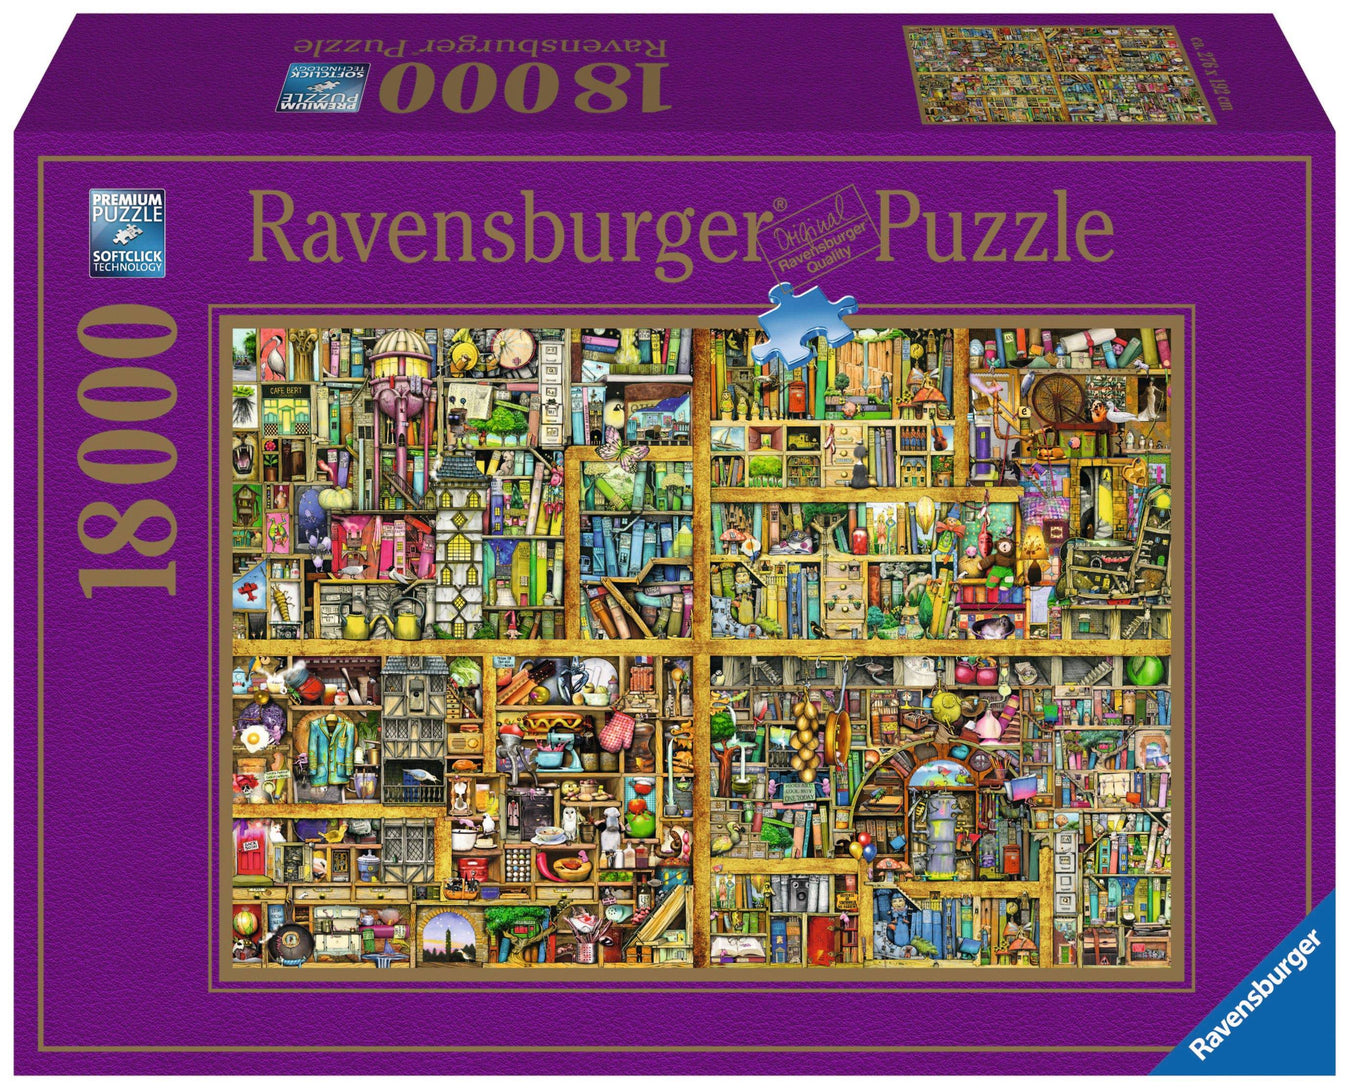 10000+ Piece Puzzles